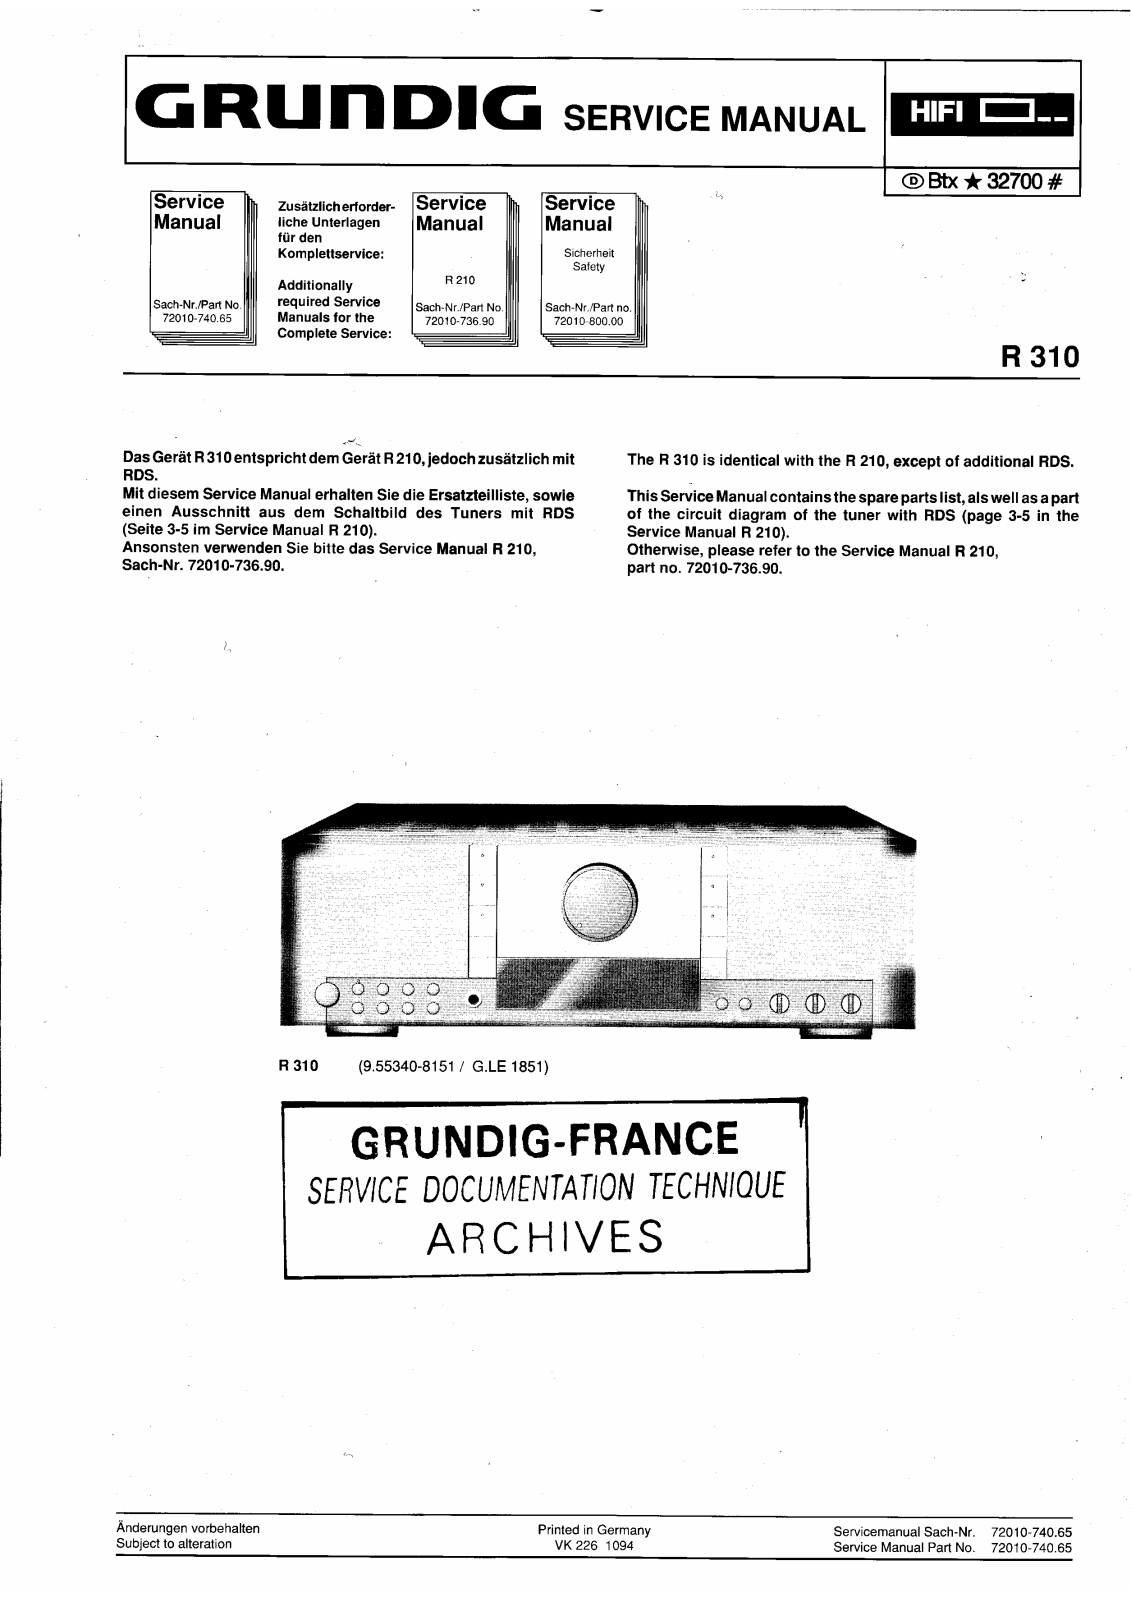 Grundig R-310 Service Manual